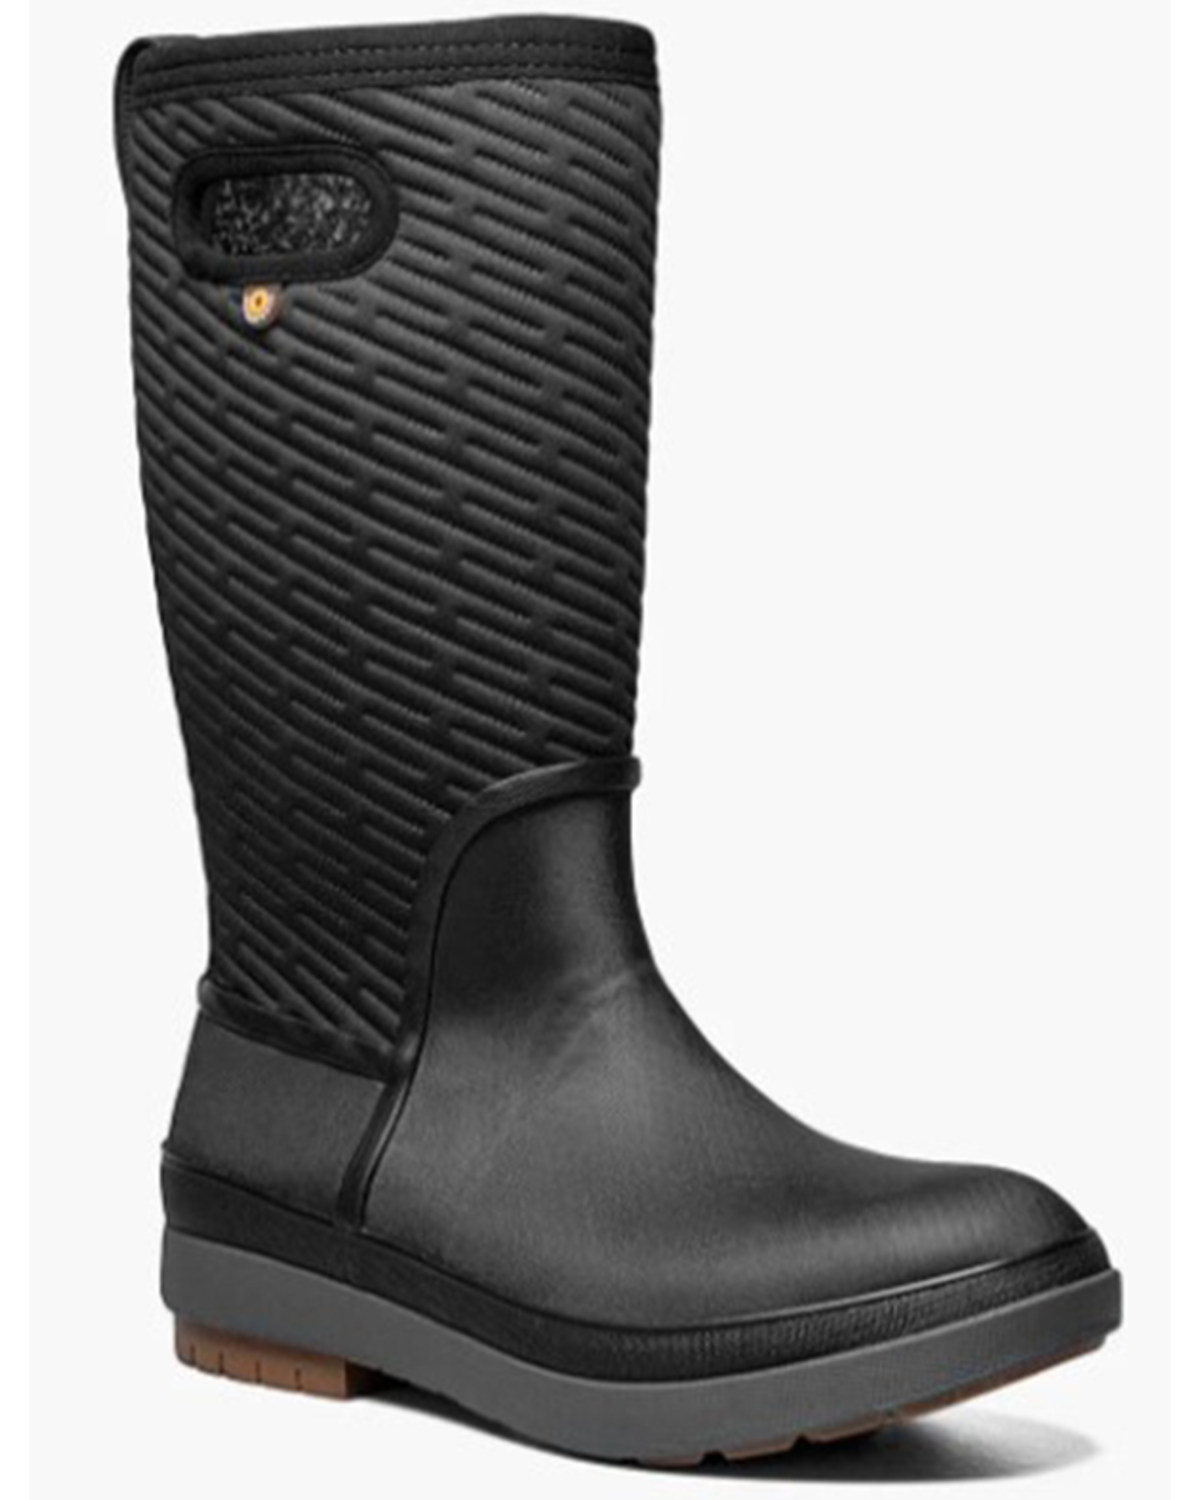 Bogs Women's Crandall II Tall Winter Boots - Soft Toe